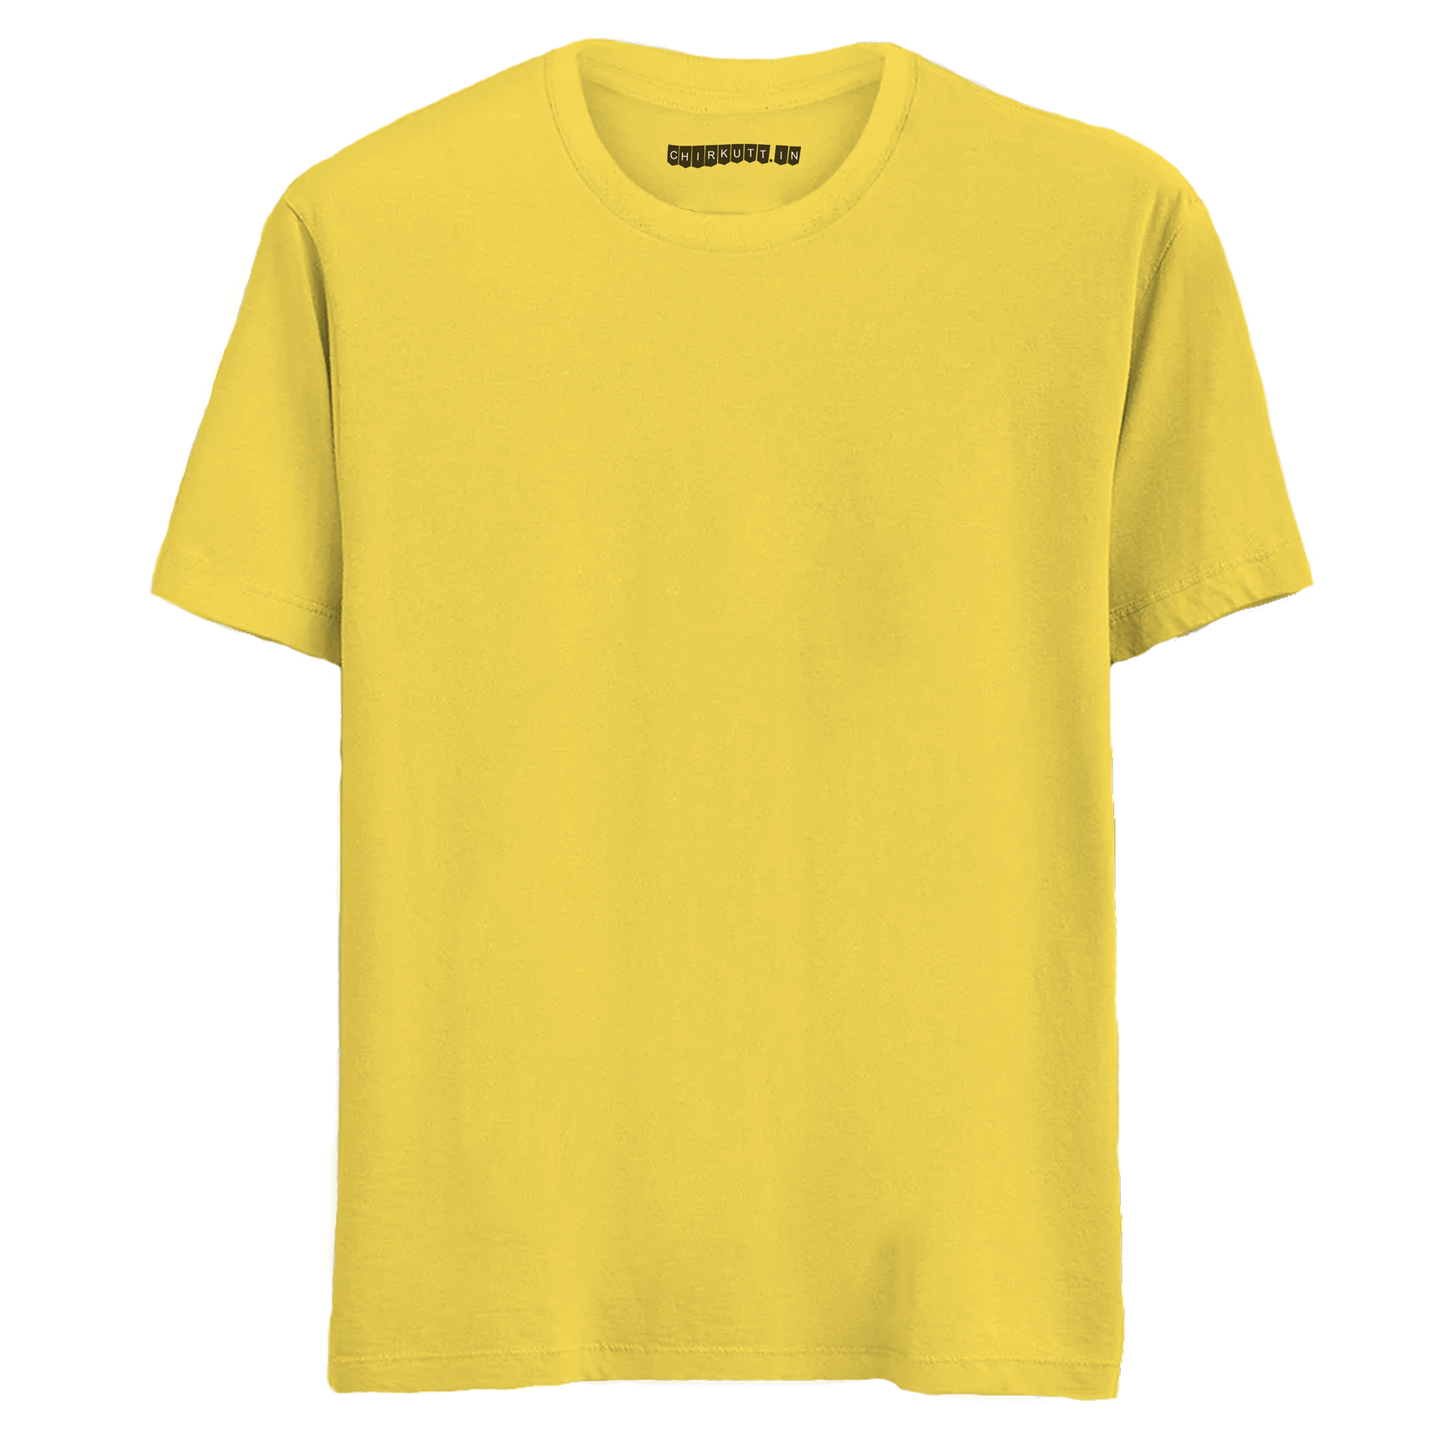 Solid Yellow Half Sleeves T-Shirt